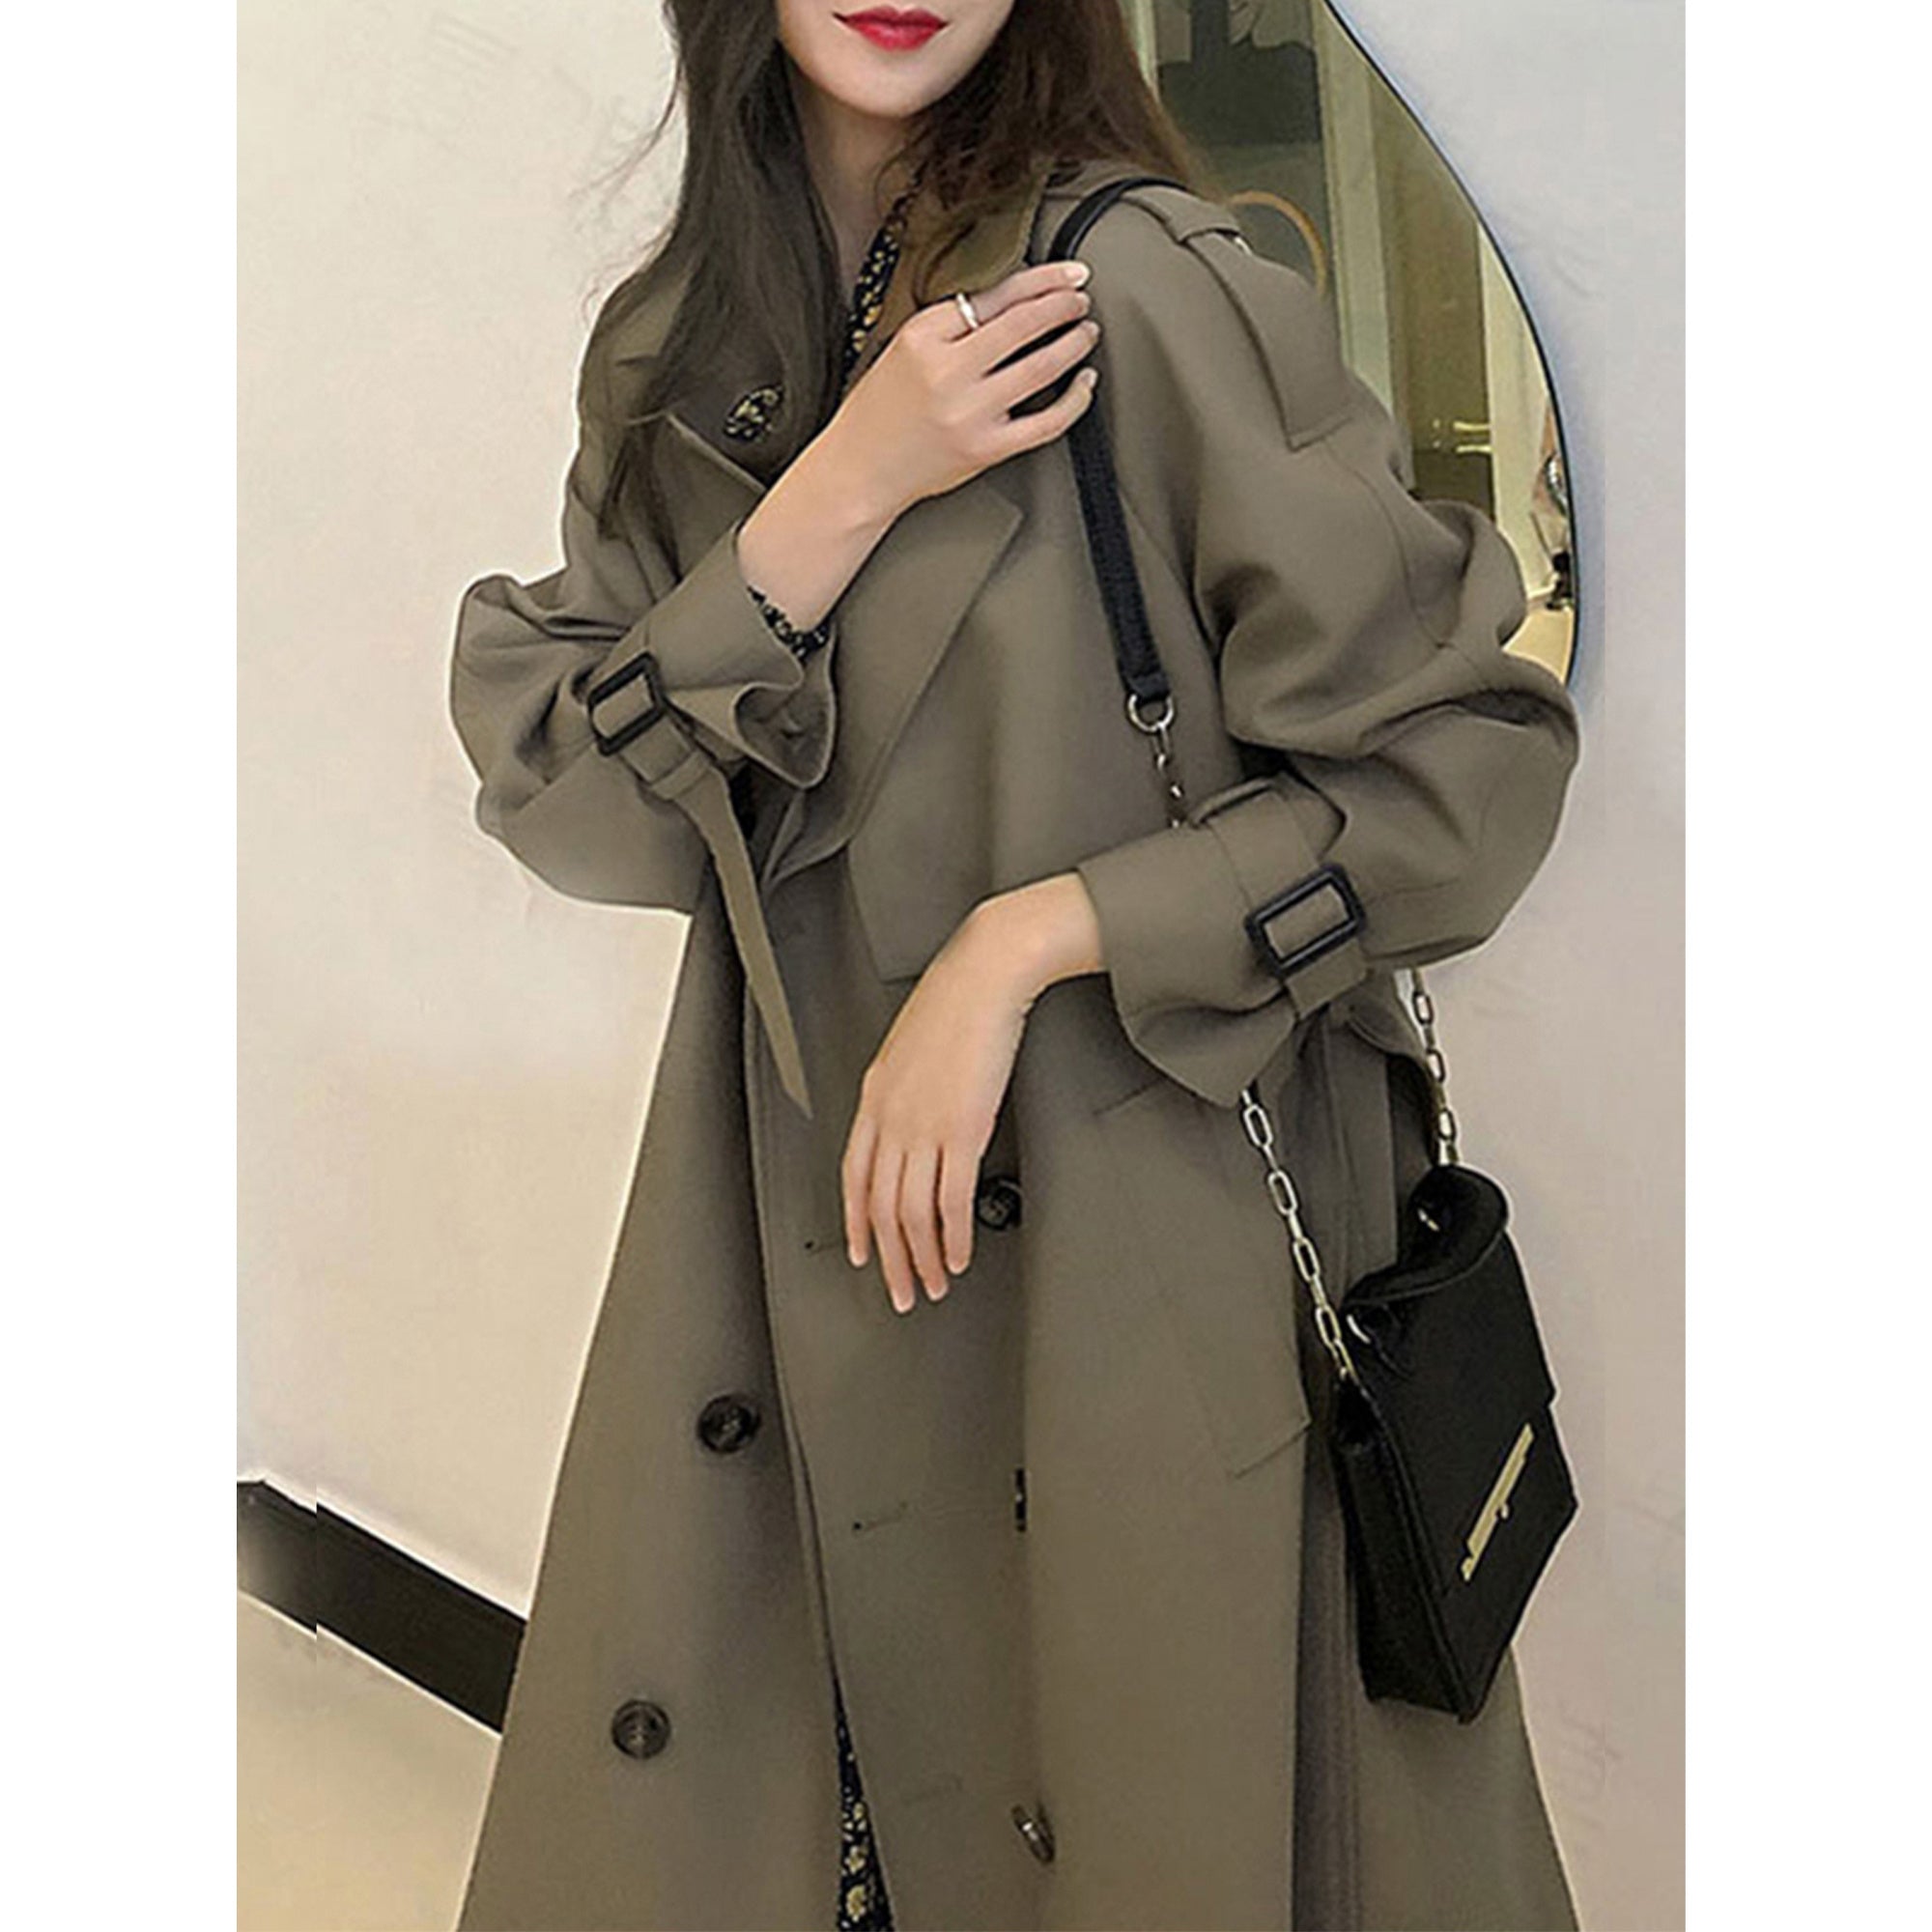 Women Trendy Trench Coat, Double Breasted Coat, Korean Women's Trench Coat, Elegant Oversize Trench Coat, Spring Clothing, Womens Clothing